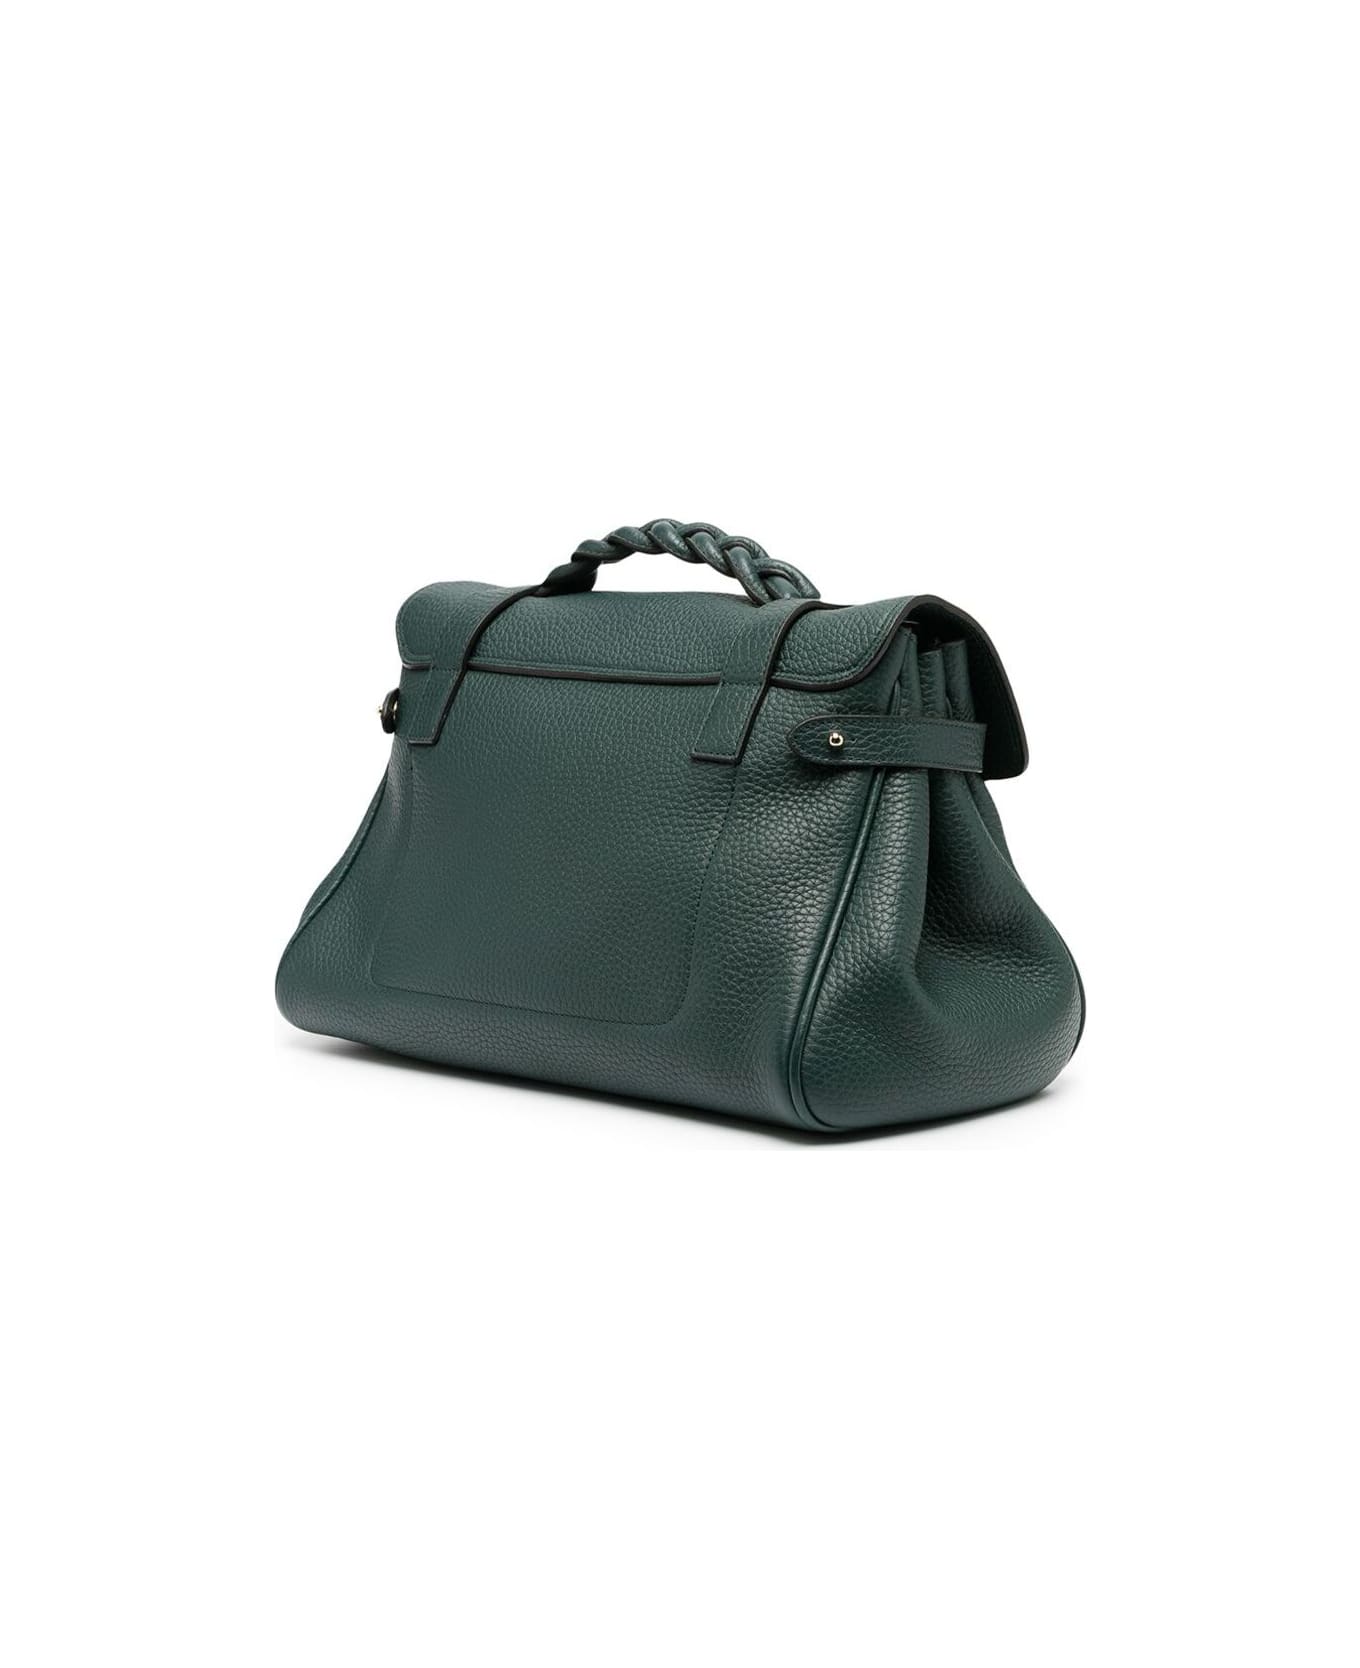 Mulberry Woman's Alexa Heavy Green Leather Handbag - Green トートバッグ